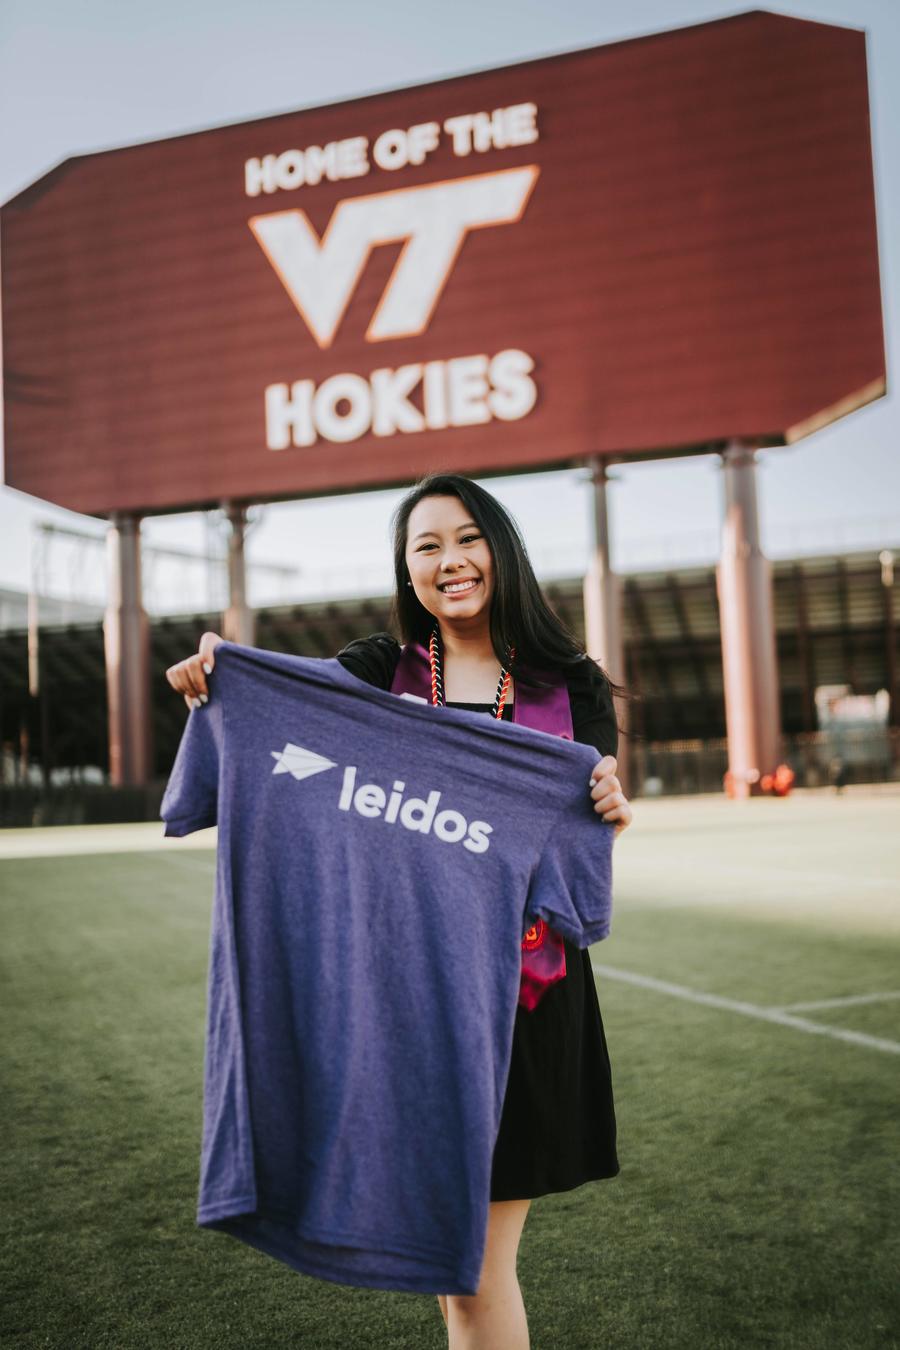 T. Van at Virginia Tech holding a Leidos t-shirt